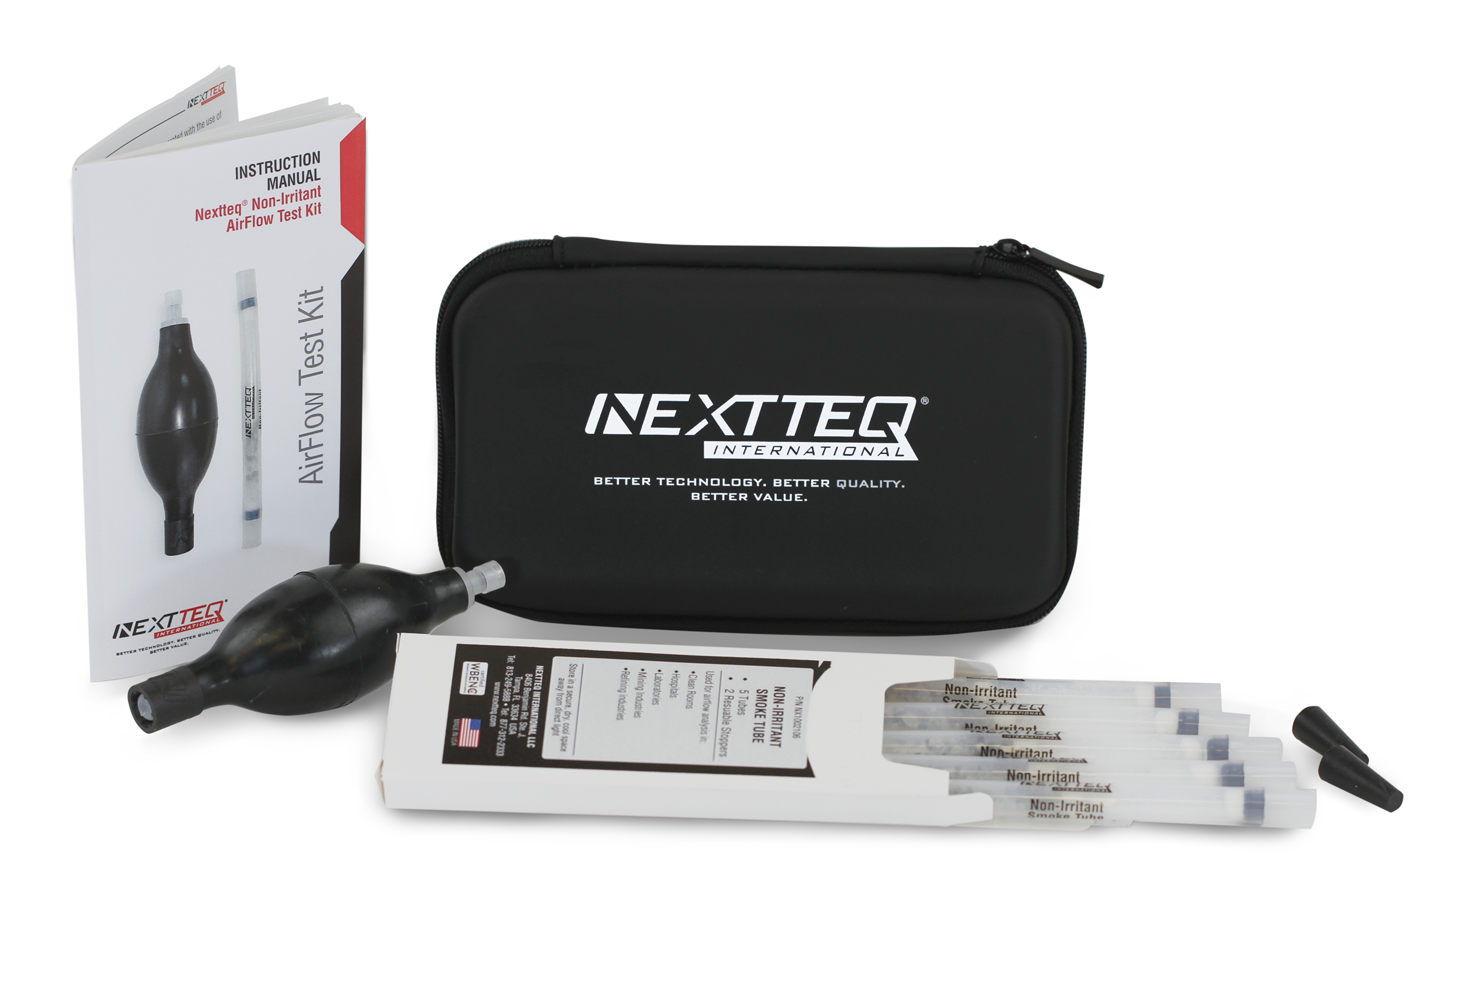 A Nextteq® Non-Irritant AirFlow Test Kit for airflow indication.